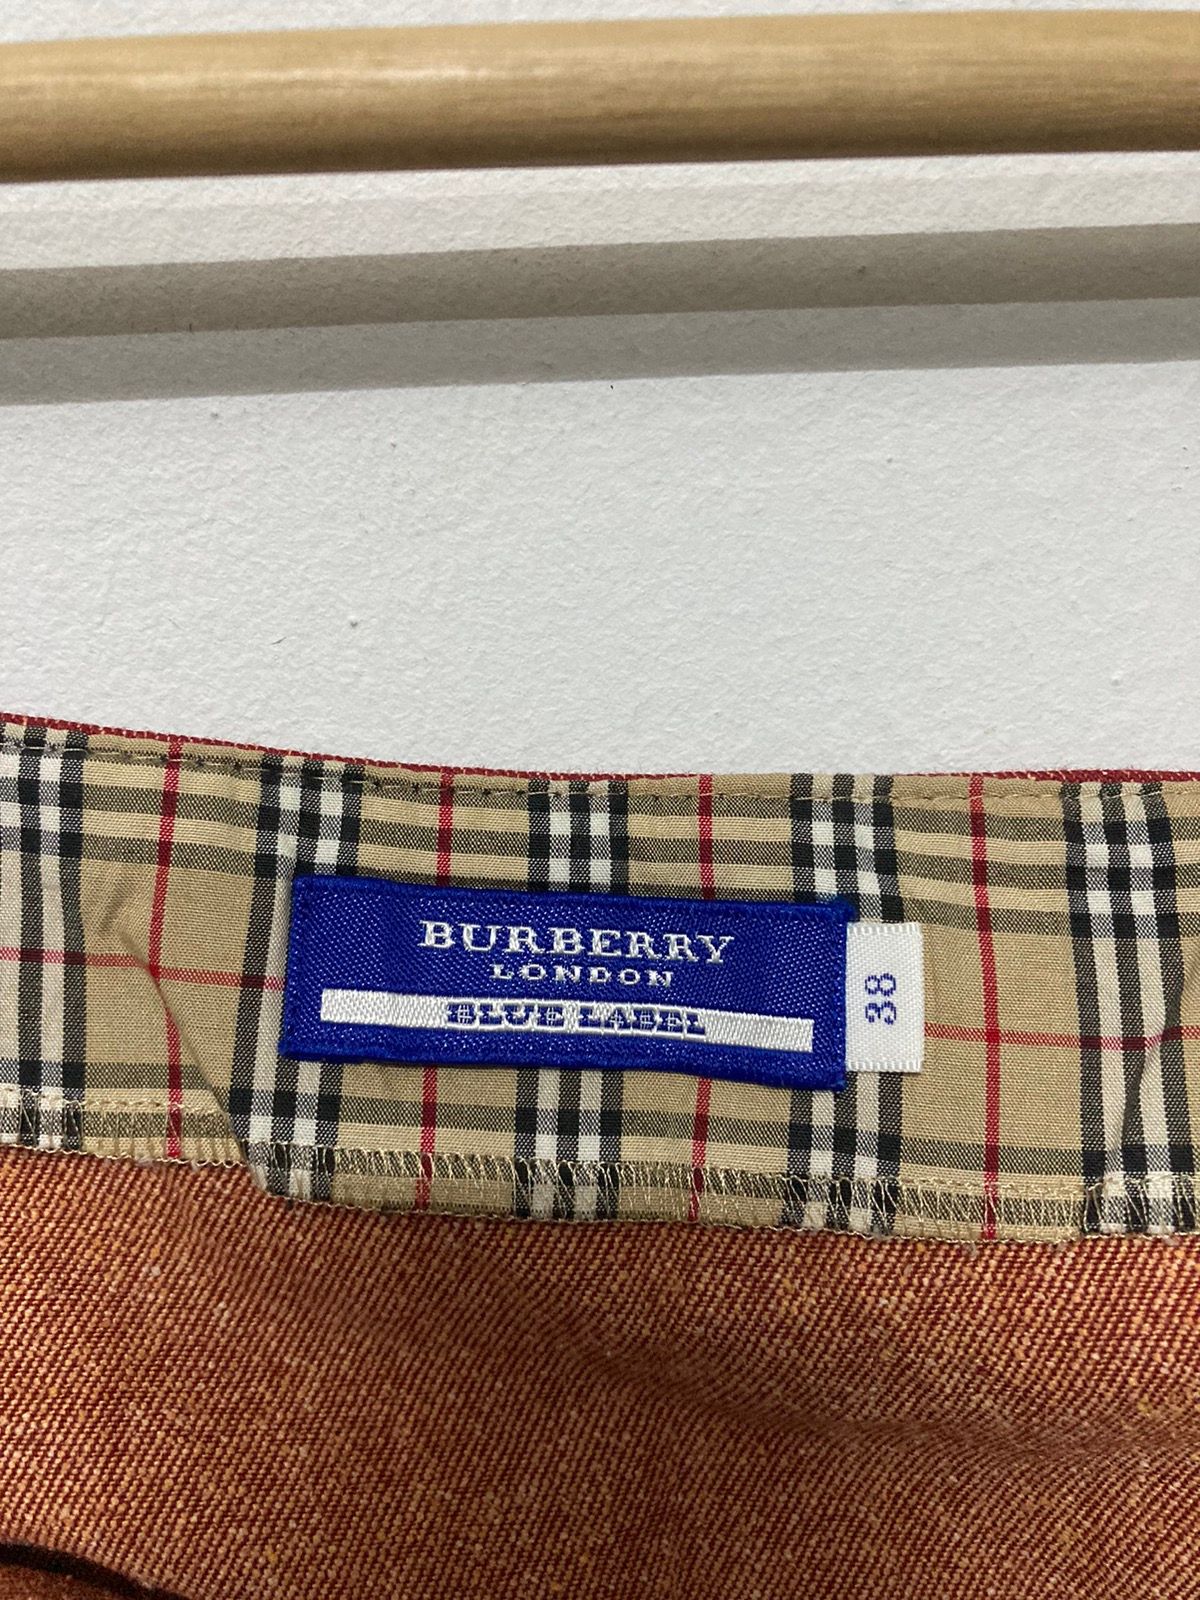 Burberry London Blue Label Skirt - 11